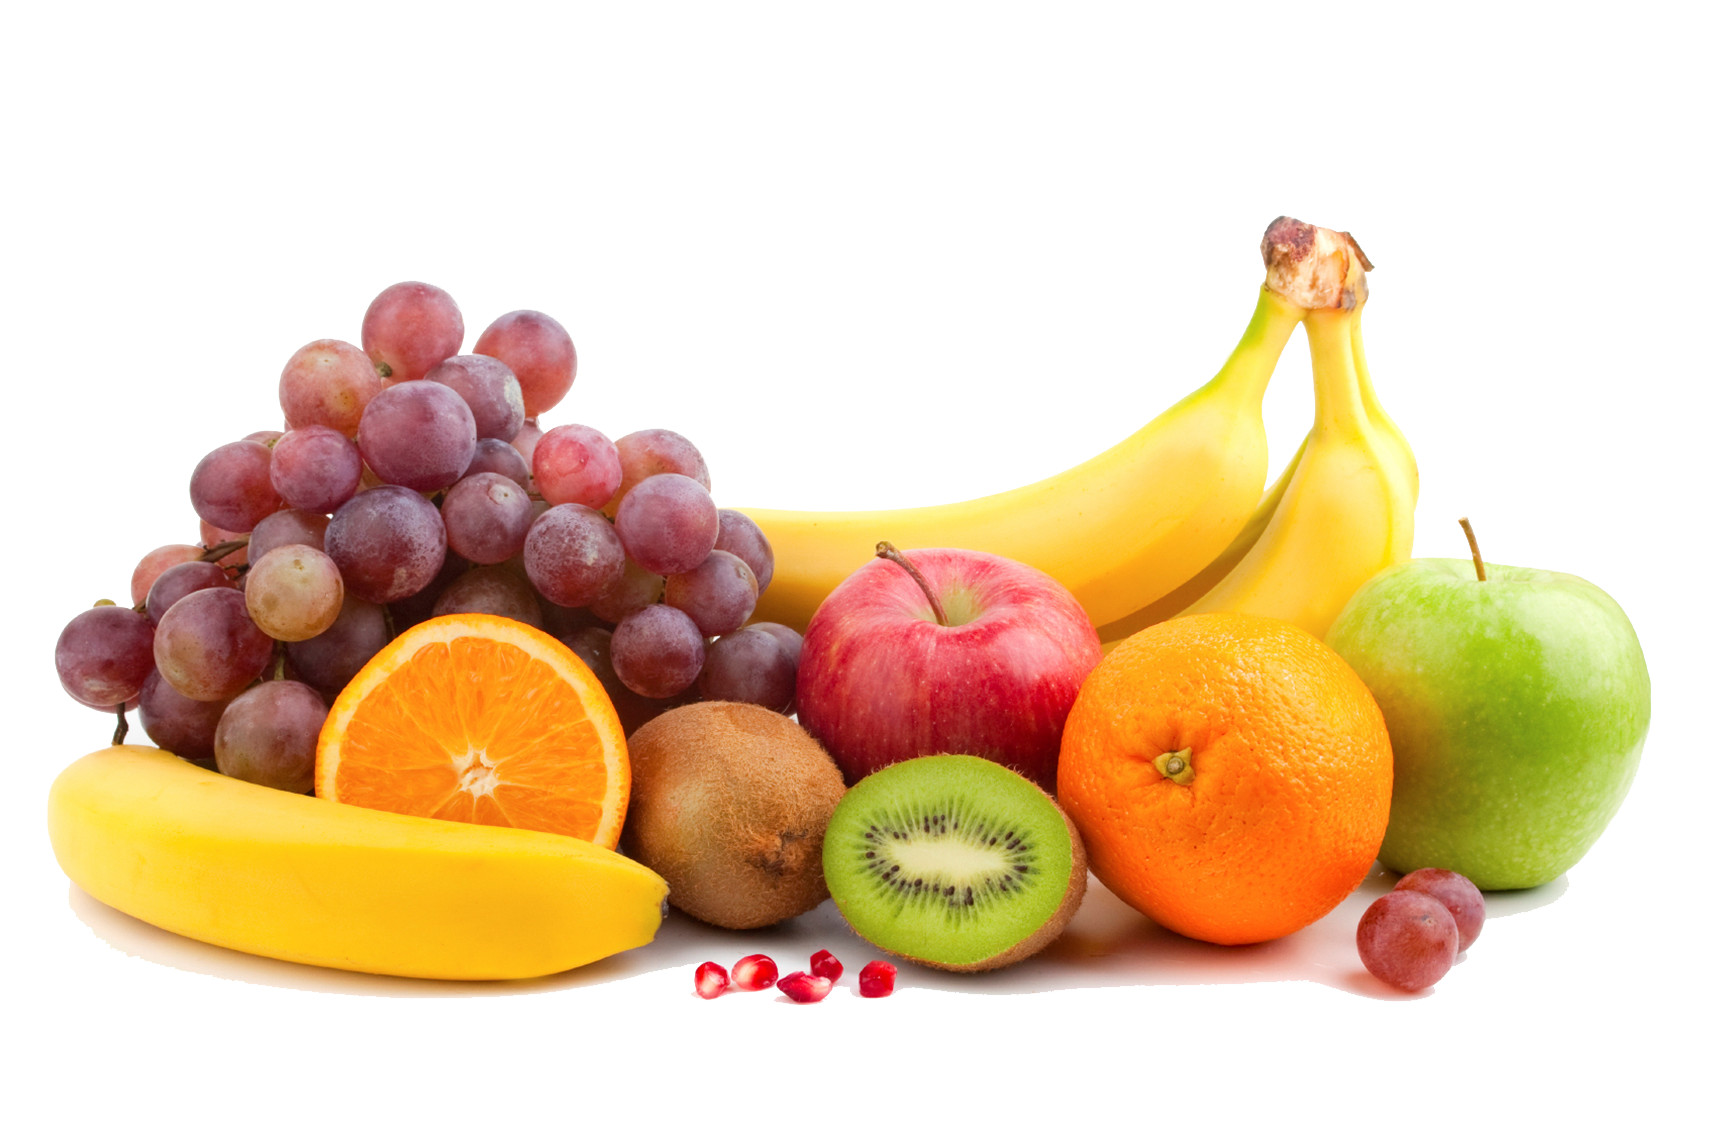 Free Fruit PNG Transparent Images, Download Free Fruit PNG Transparent